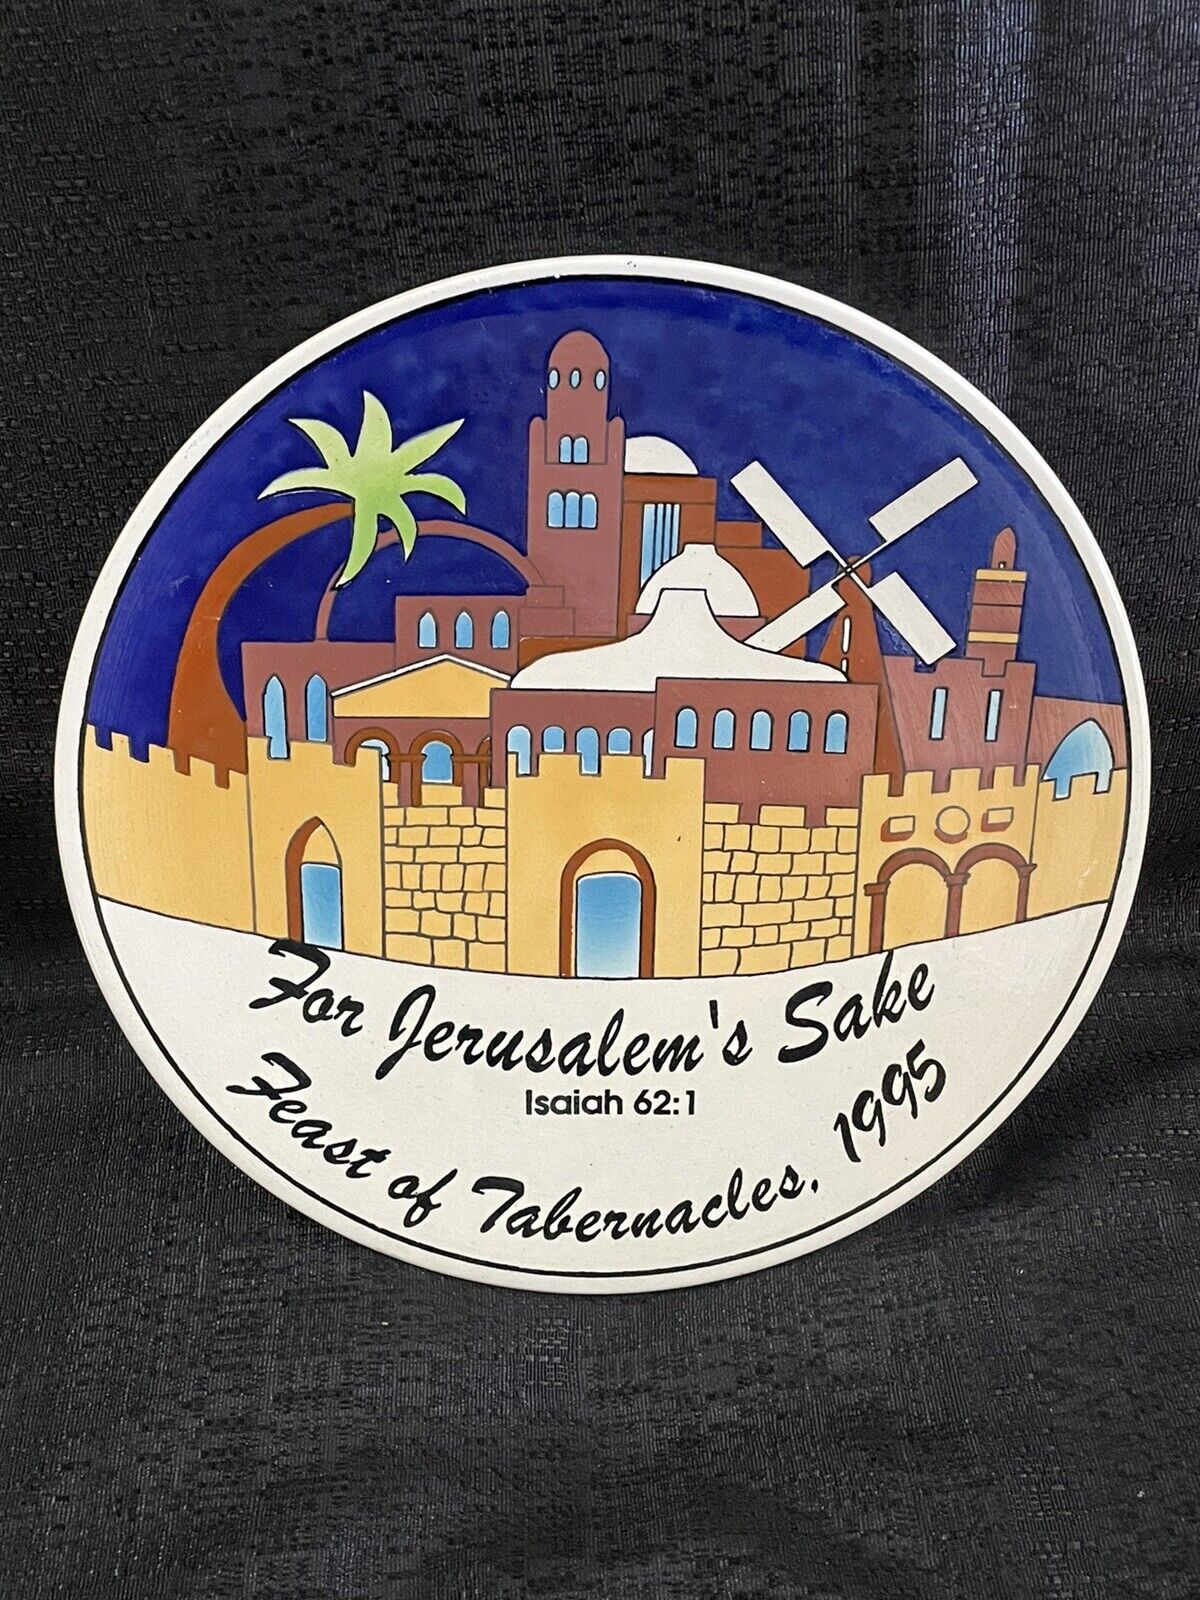 Feast of Tabernacles Jerusalem 1995 Decorative Ceramic Wall Plate 10.5”